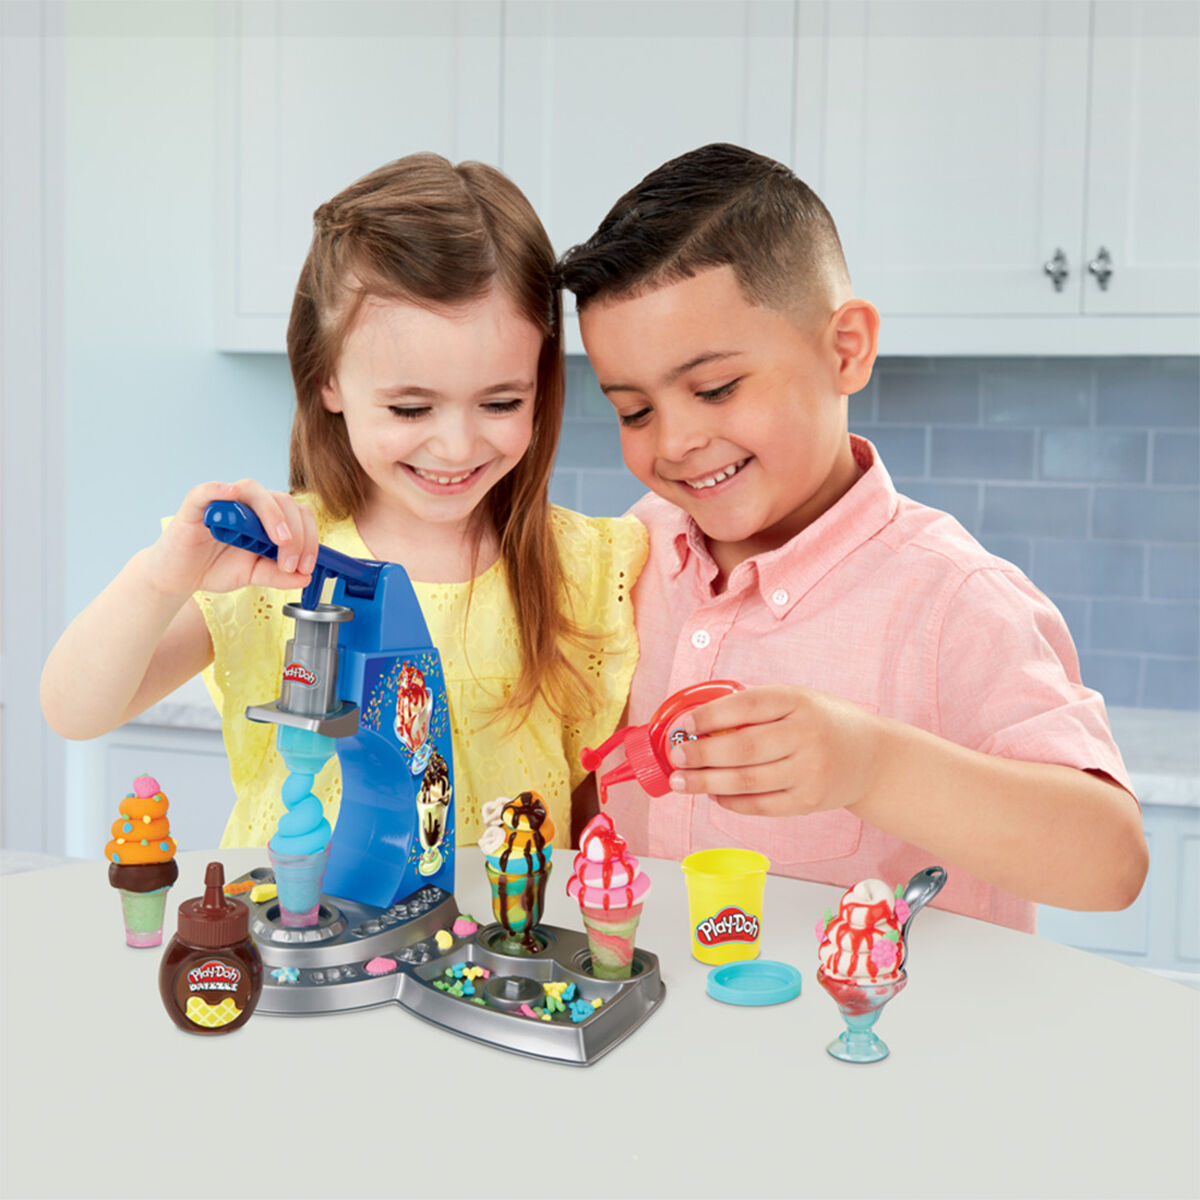 Play-Doh Kitchen Creations Drizzy Heladería Creativa